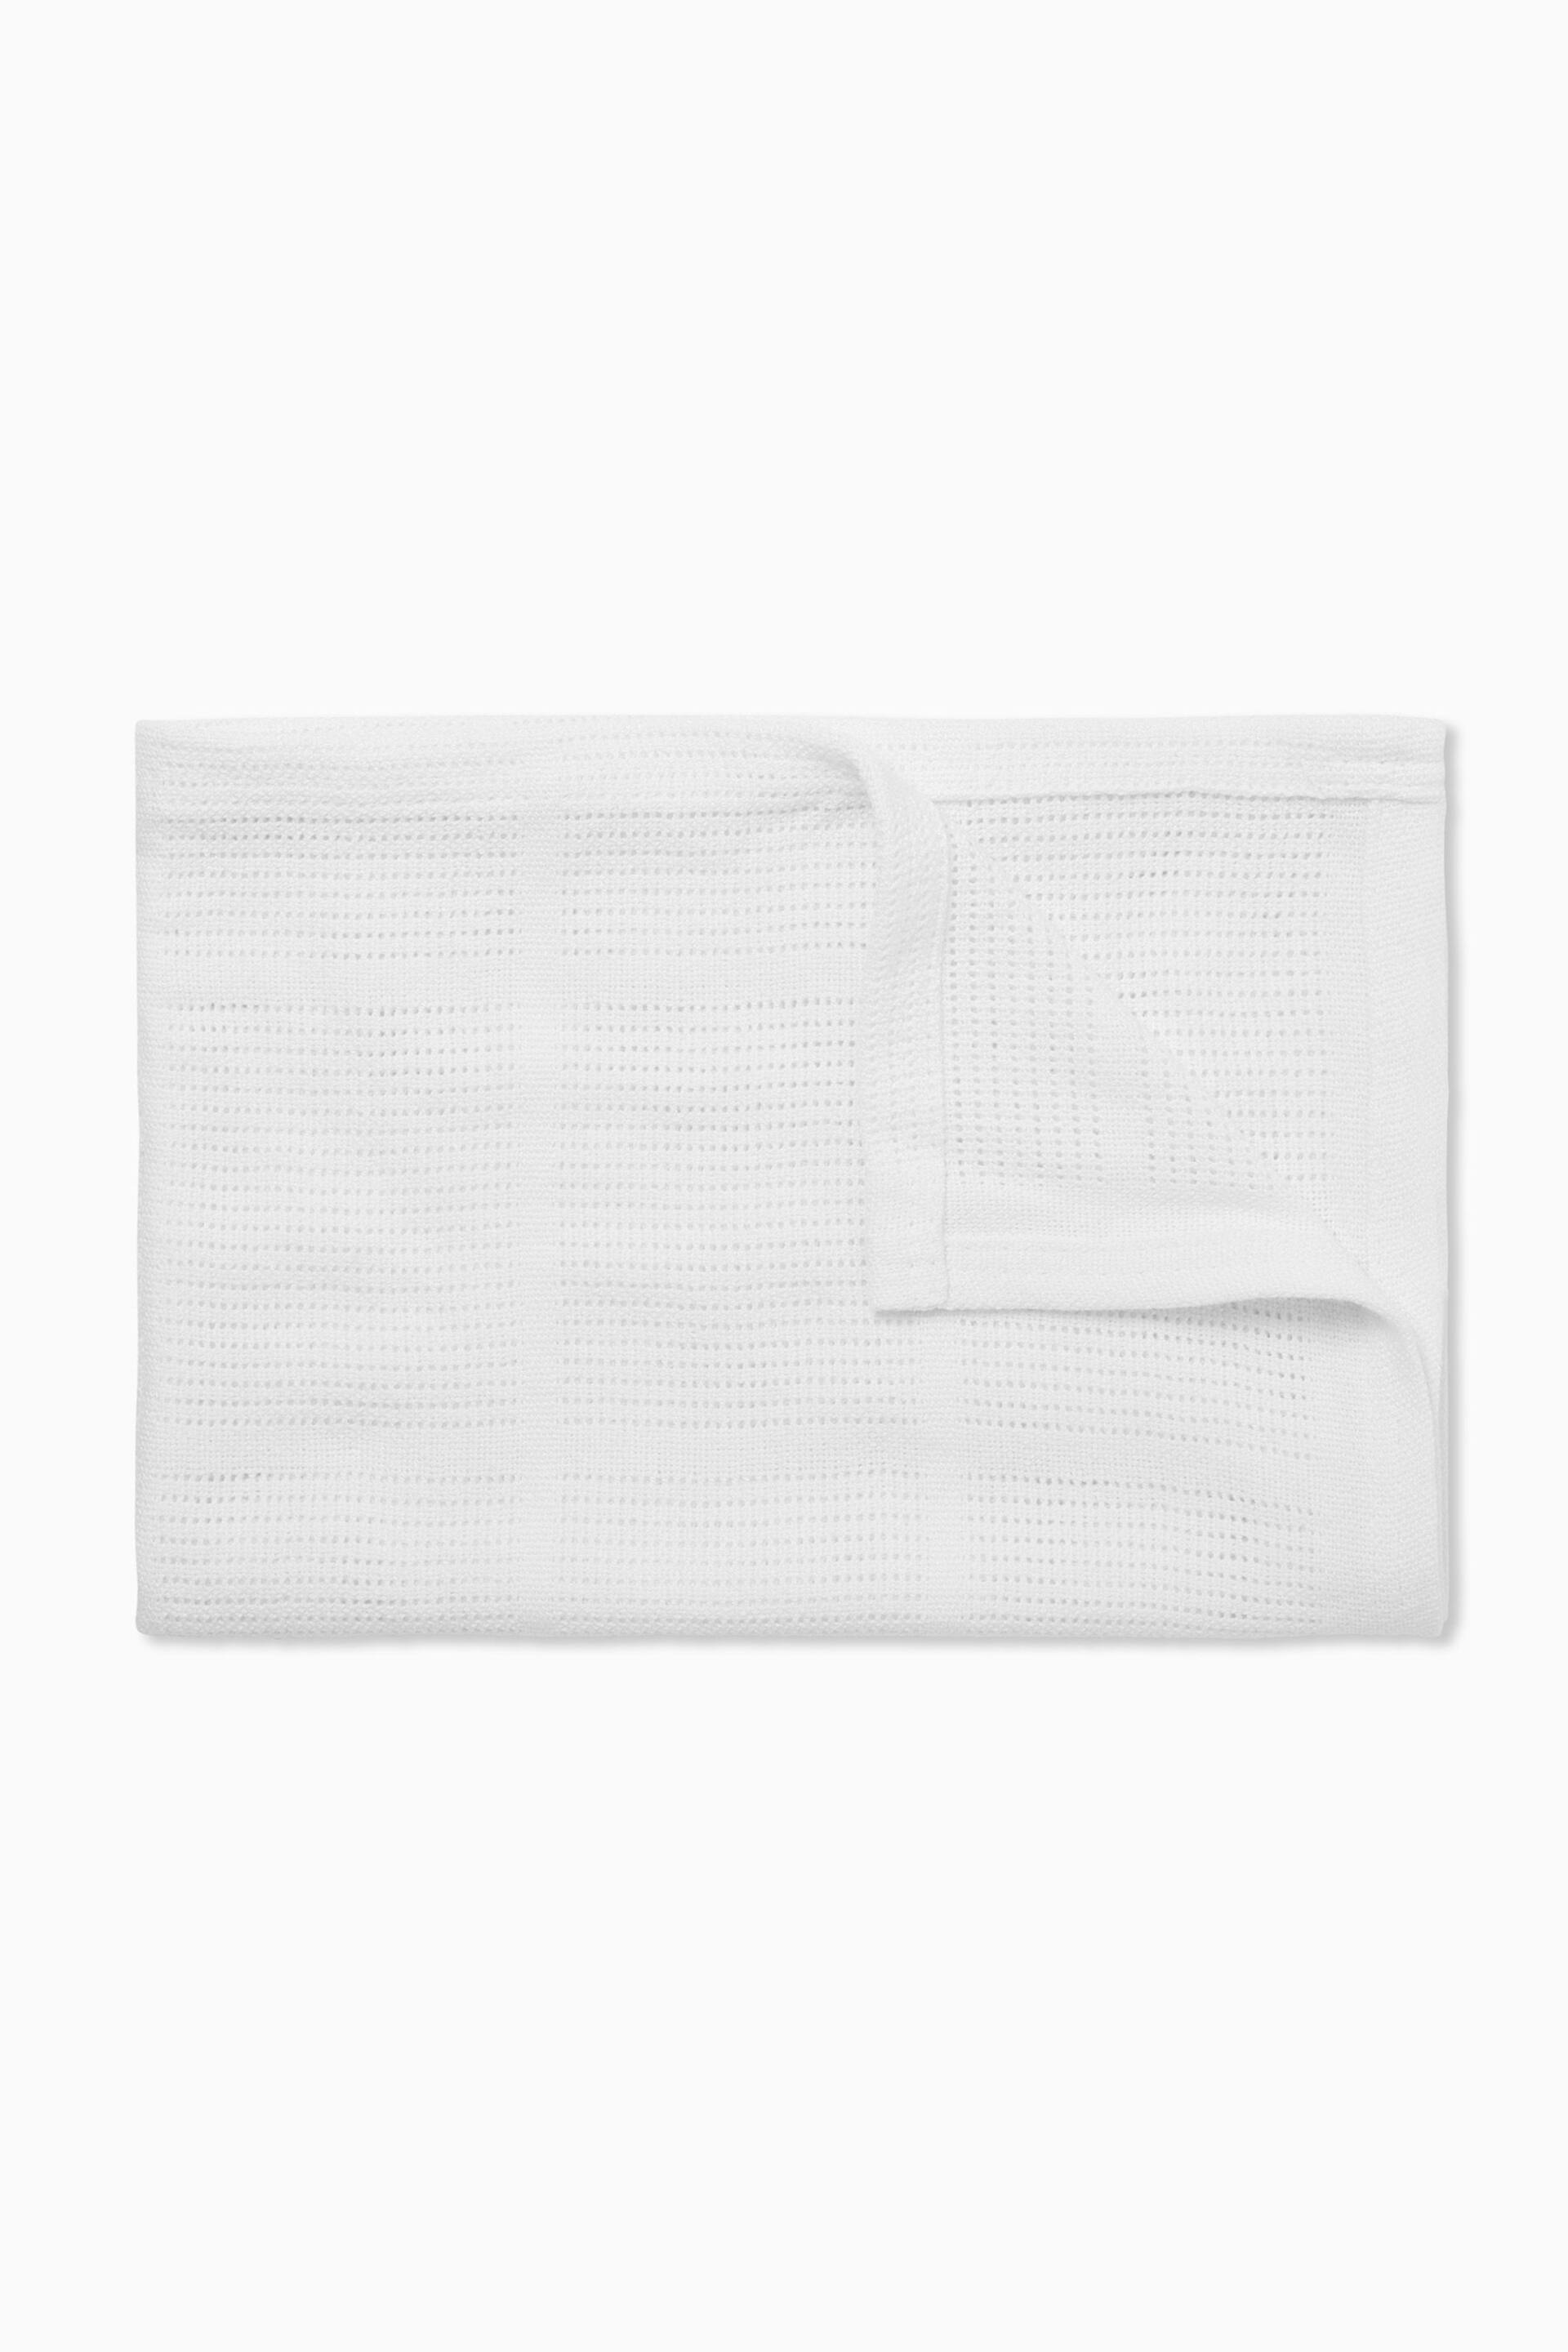 MORI White Soft Cotton & Bamboo Cellular Baby Blanket - Image 1 of 4